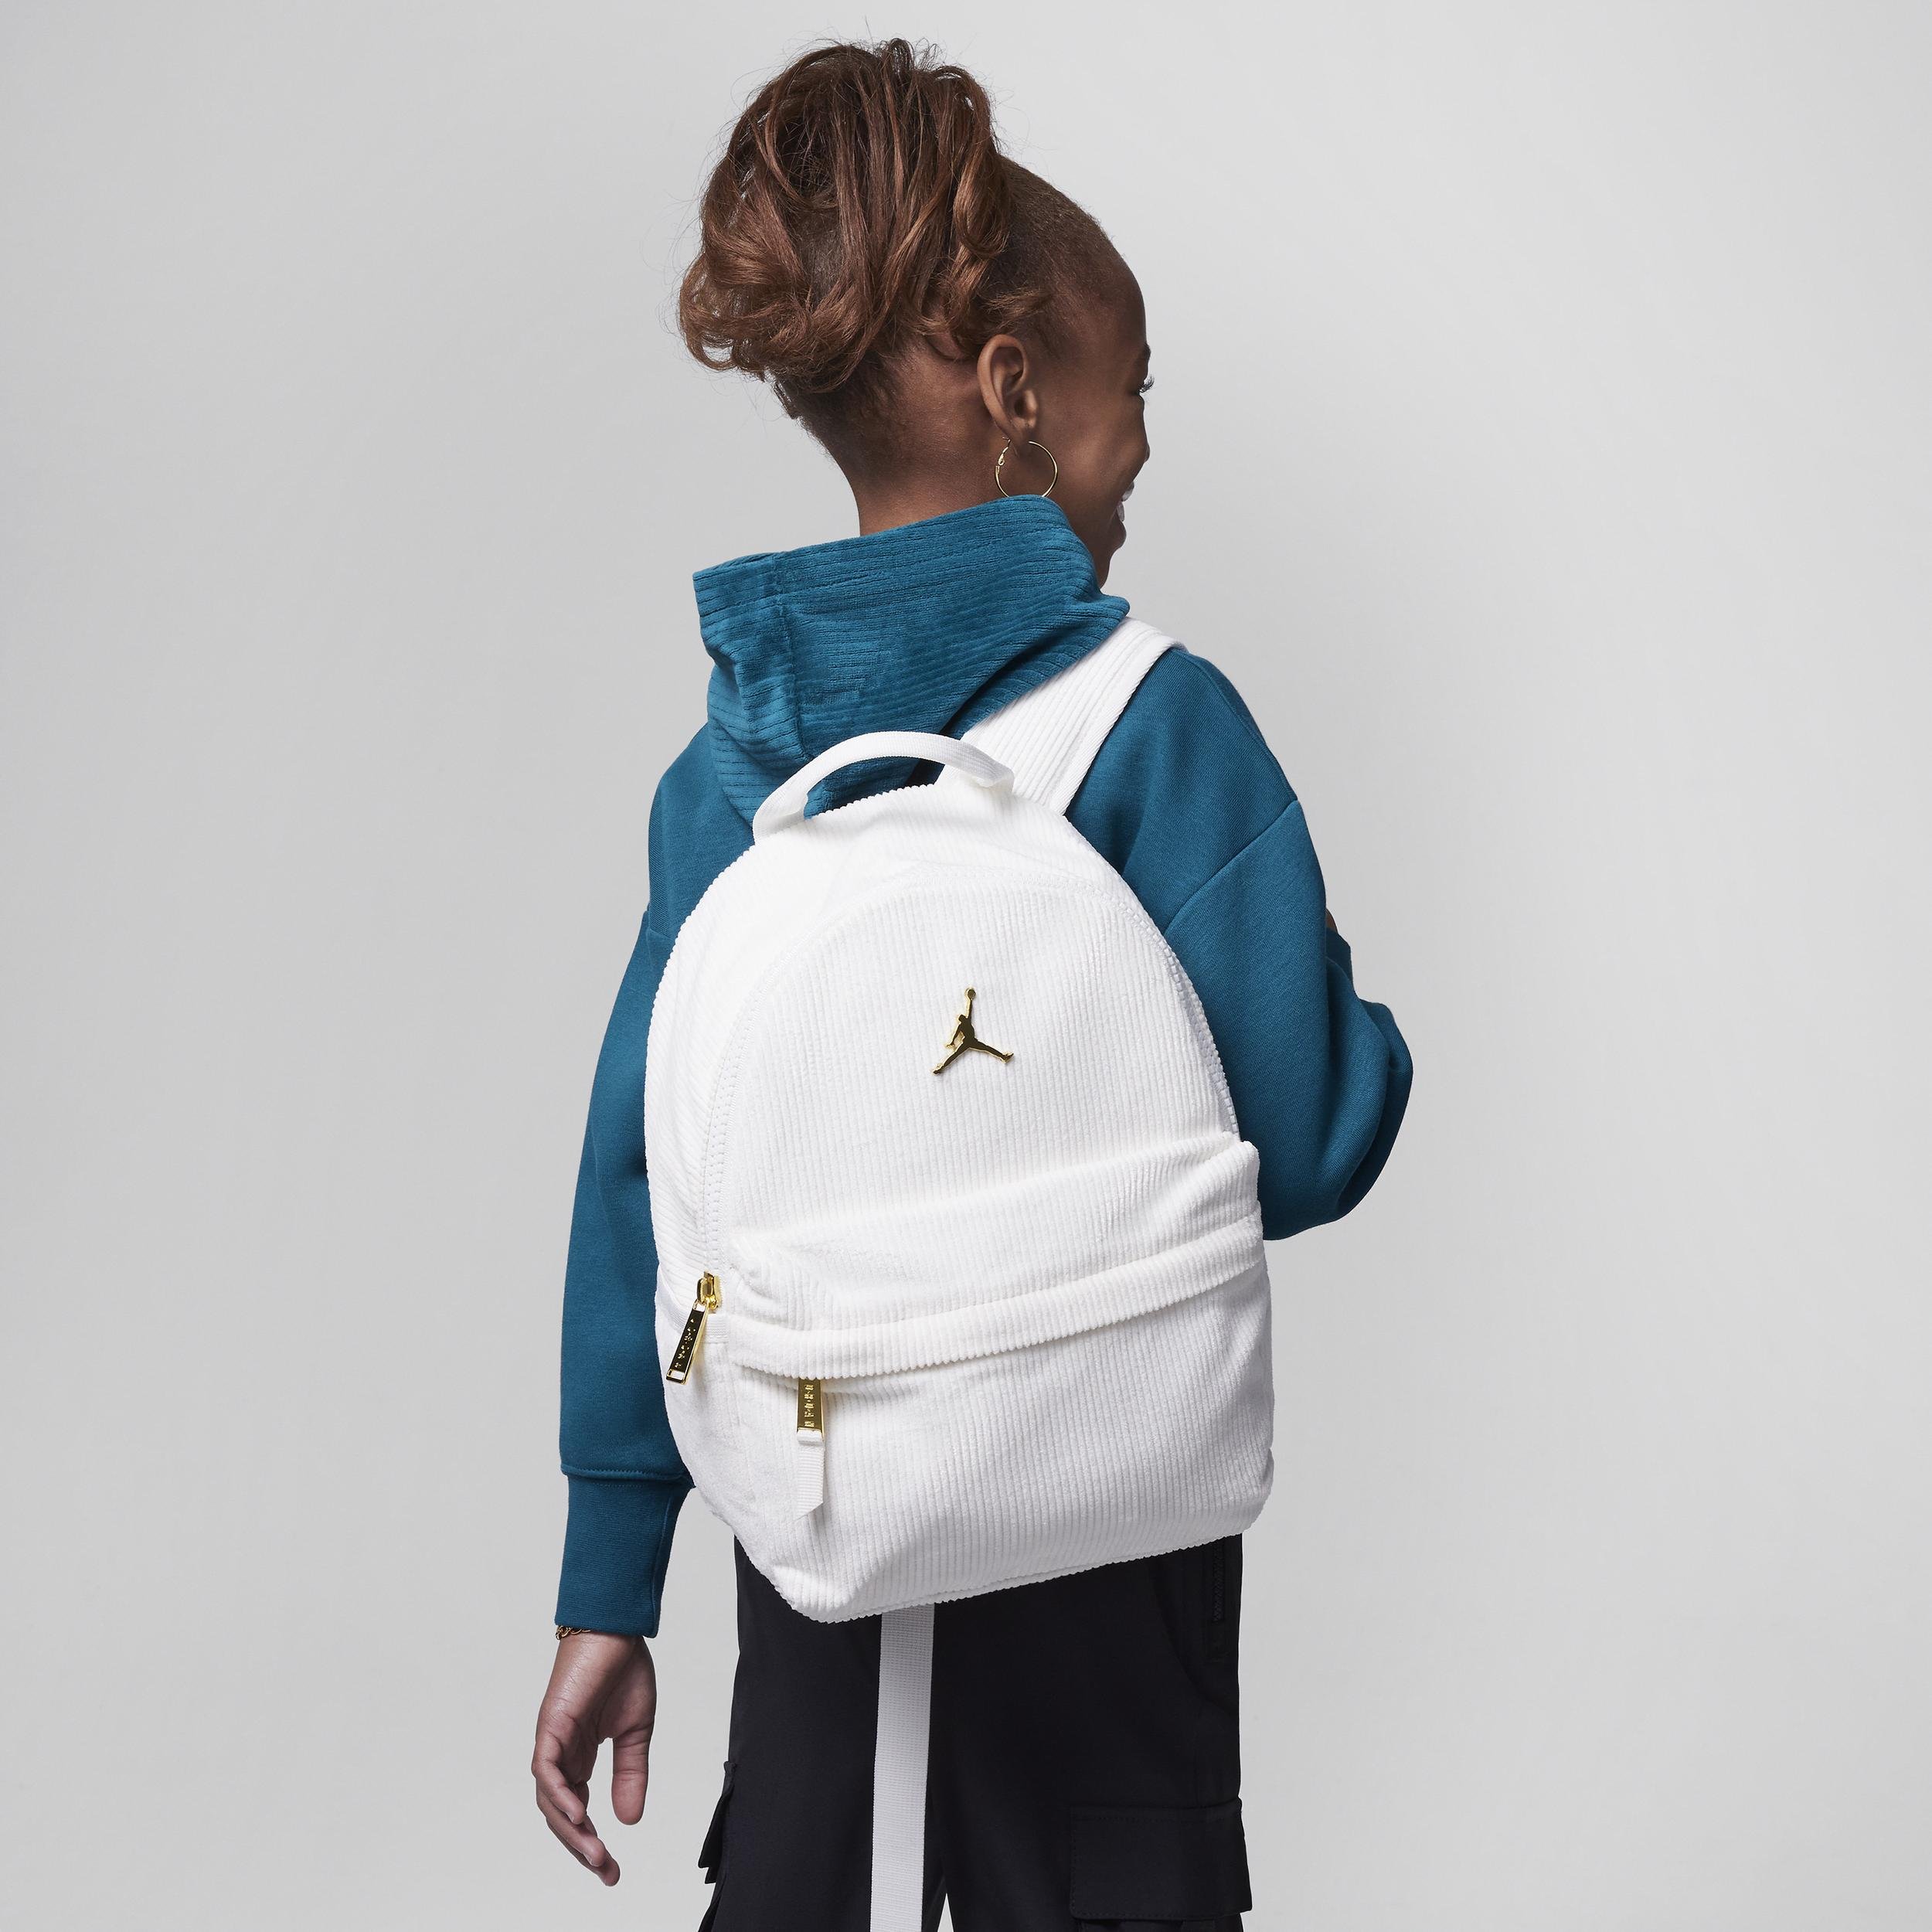 Jordan Mini Backpack Kids Mini Backpack (10L) by JORDAN